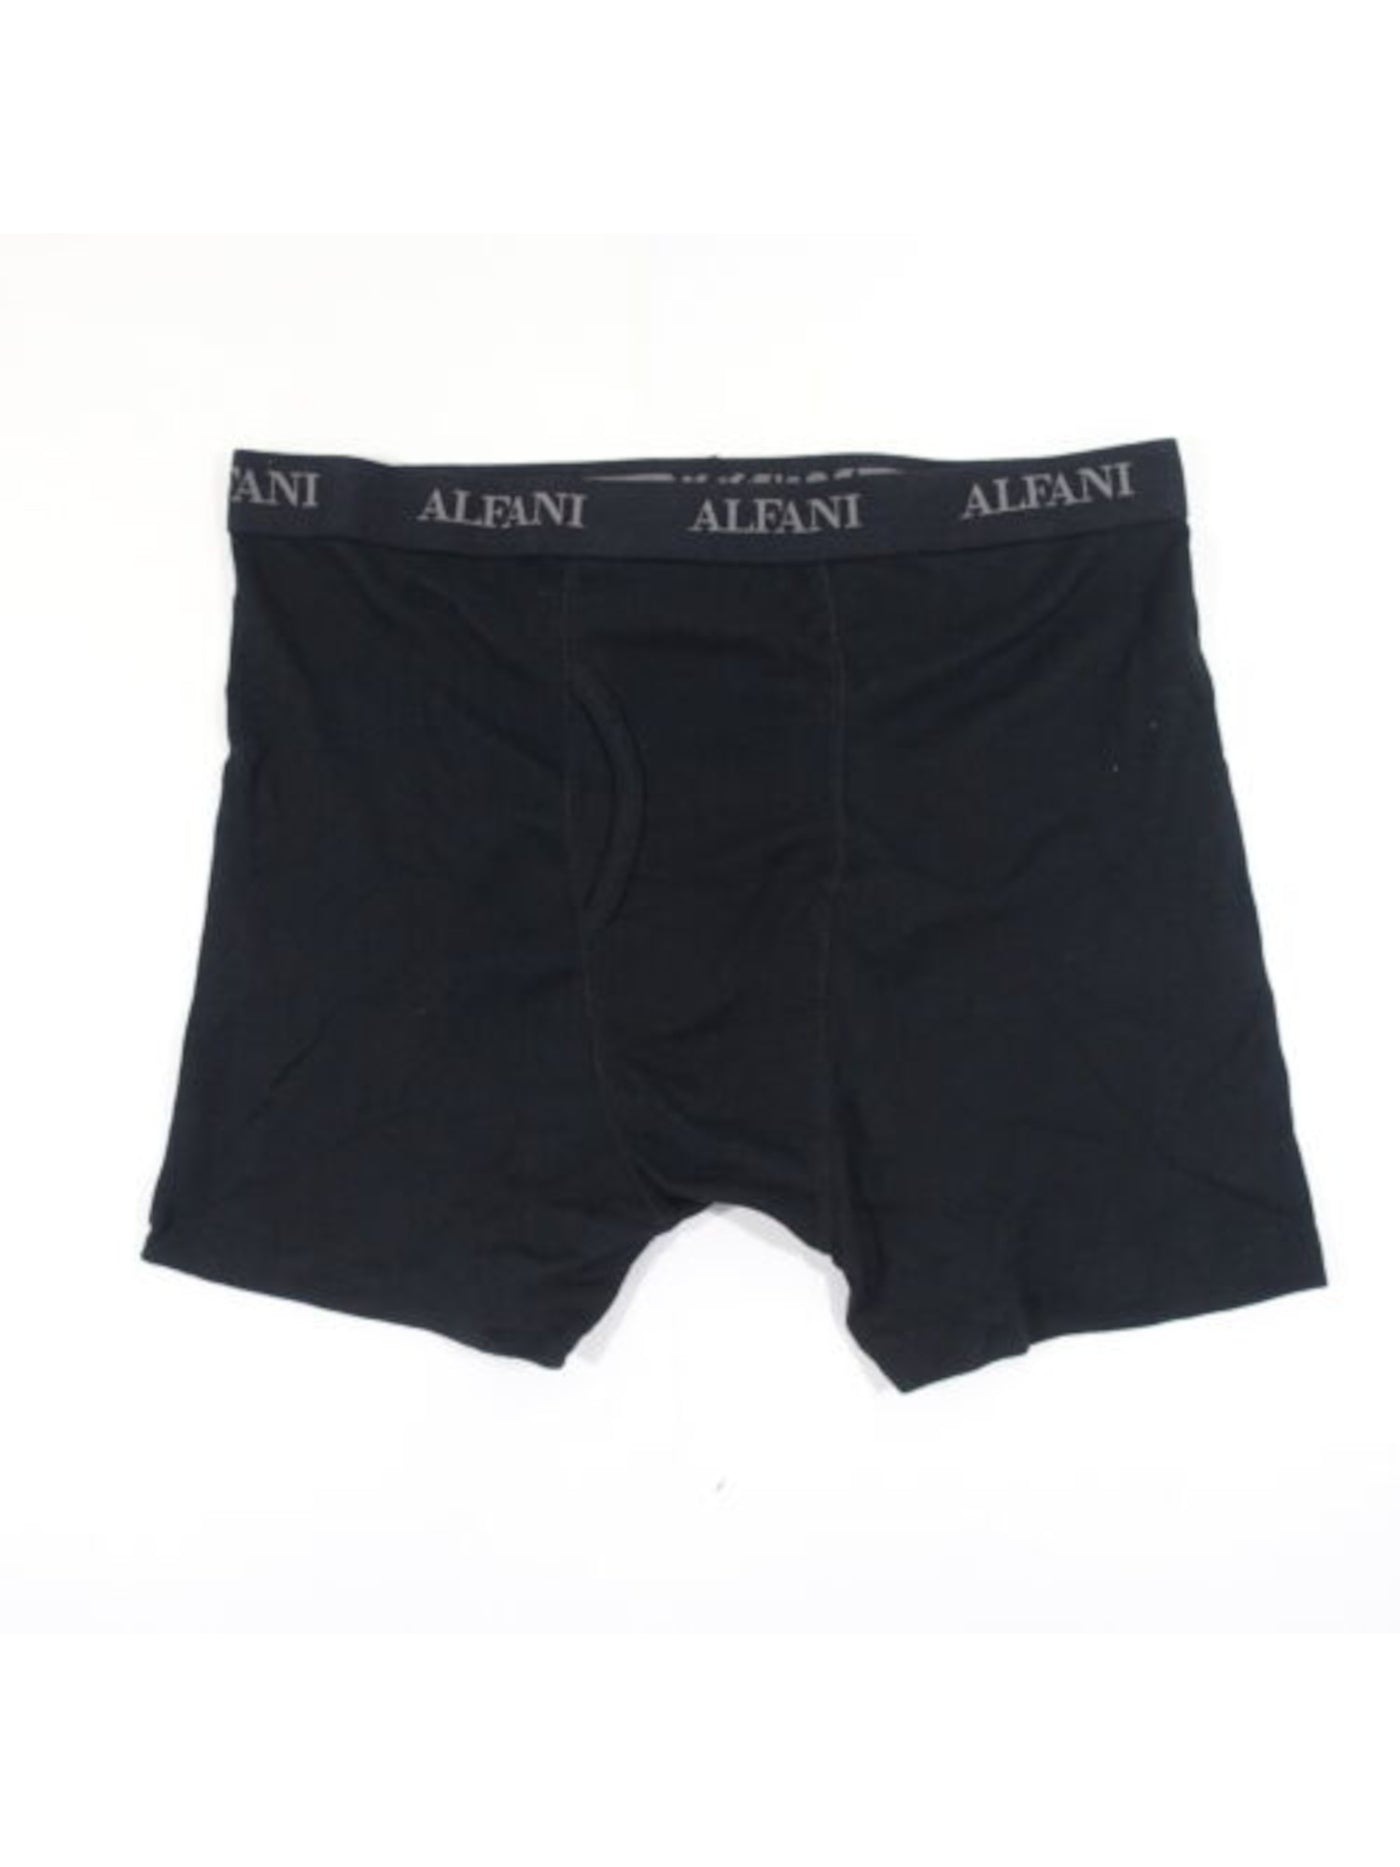 ALFATECH BY ALFANI Intimates Black Mesh Quick-Dry Boxer Brief Underwear M